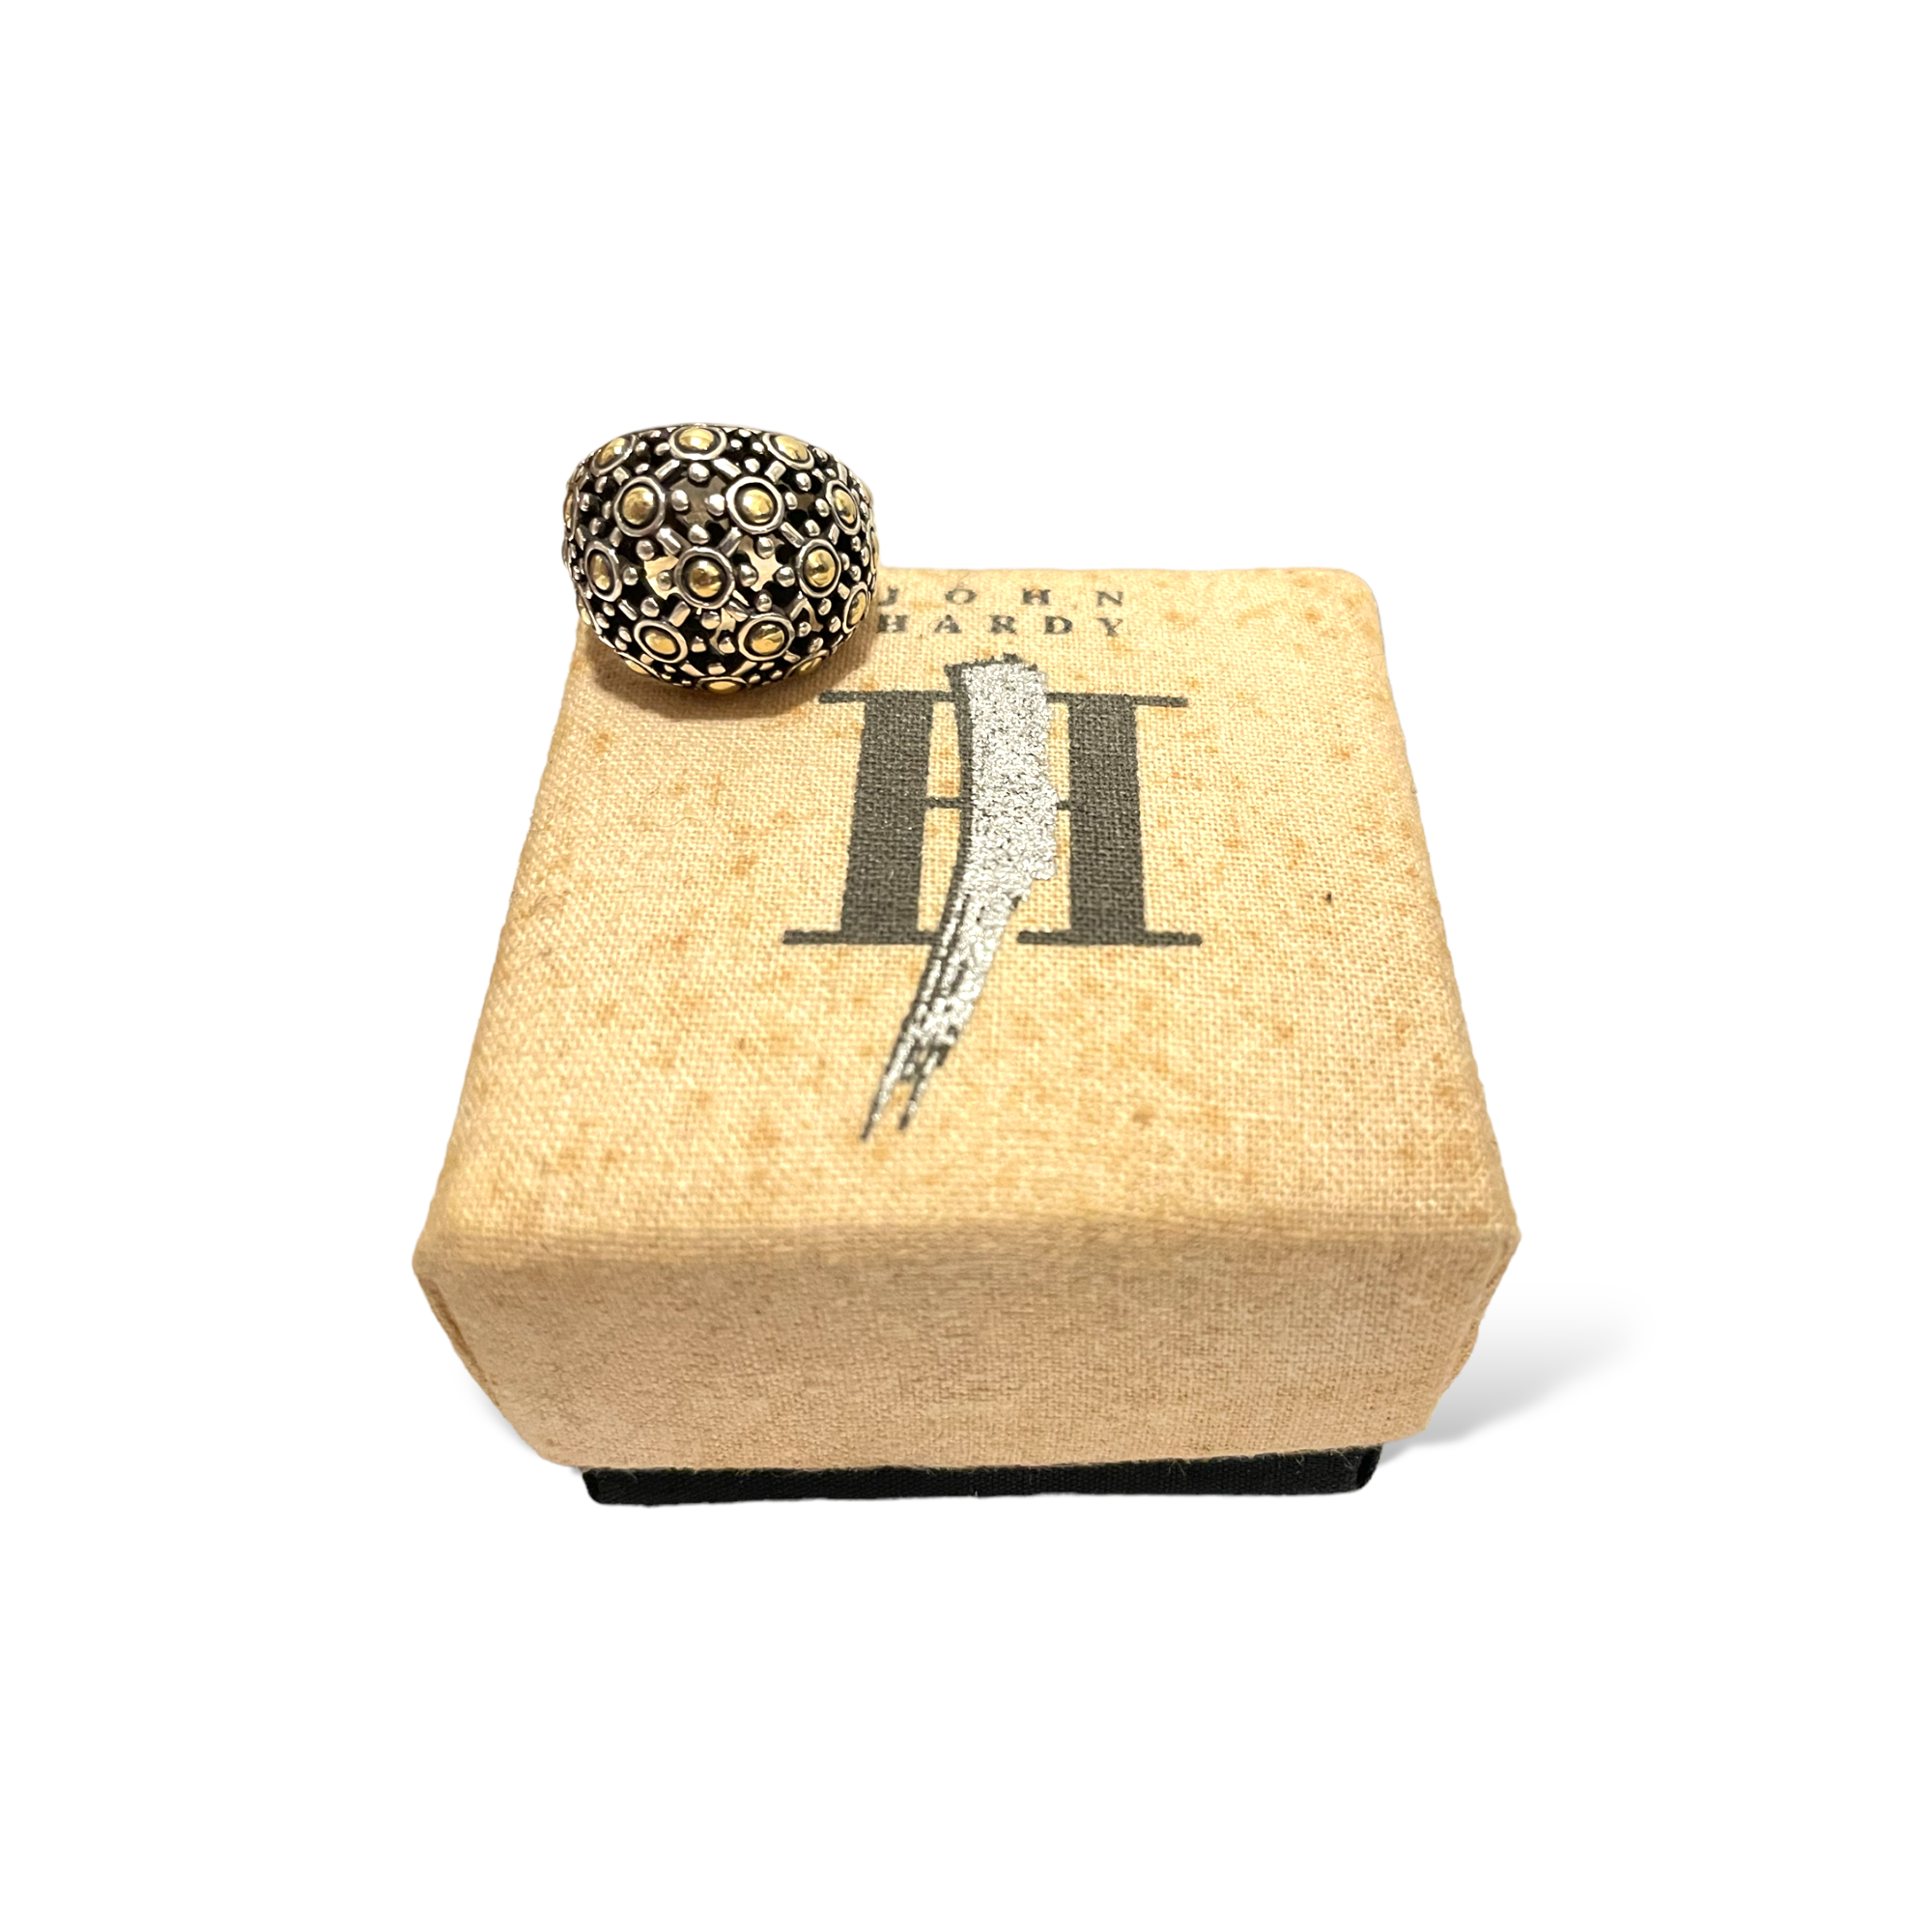 JOHN HARDY Two-Tone .925/18k Gold Jaisalmer Dot Dome Ring |Size: 6.5|